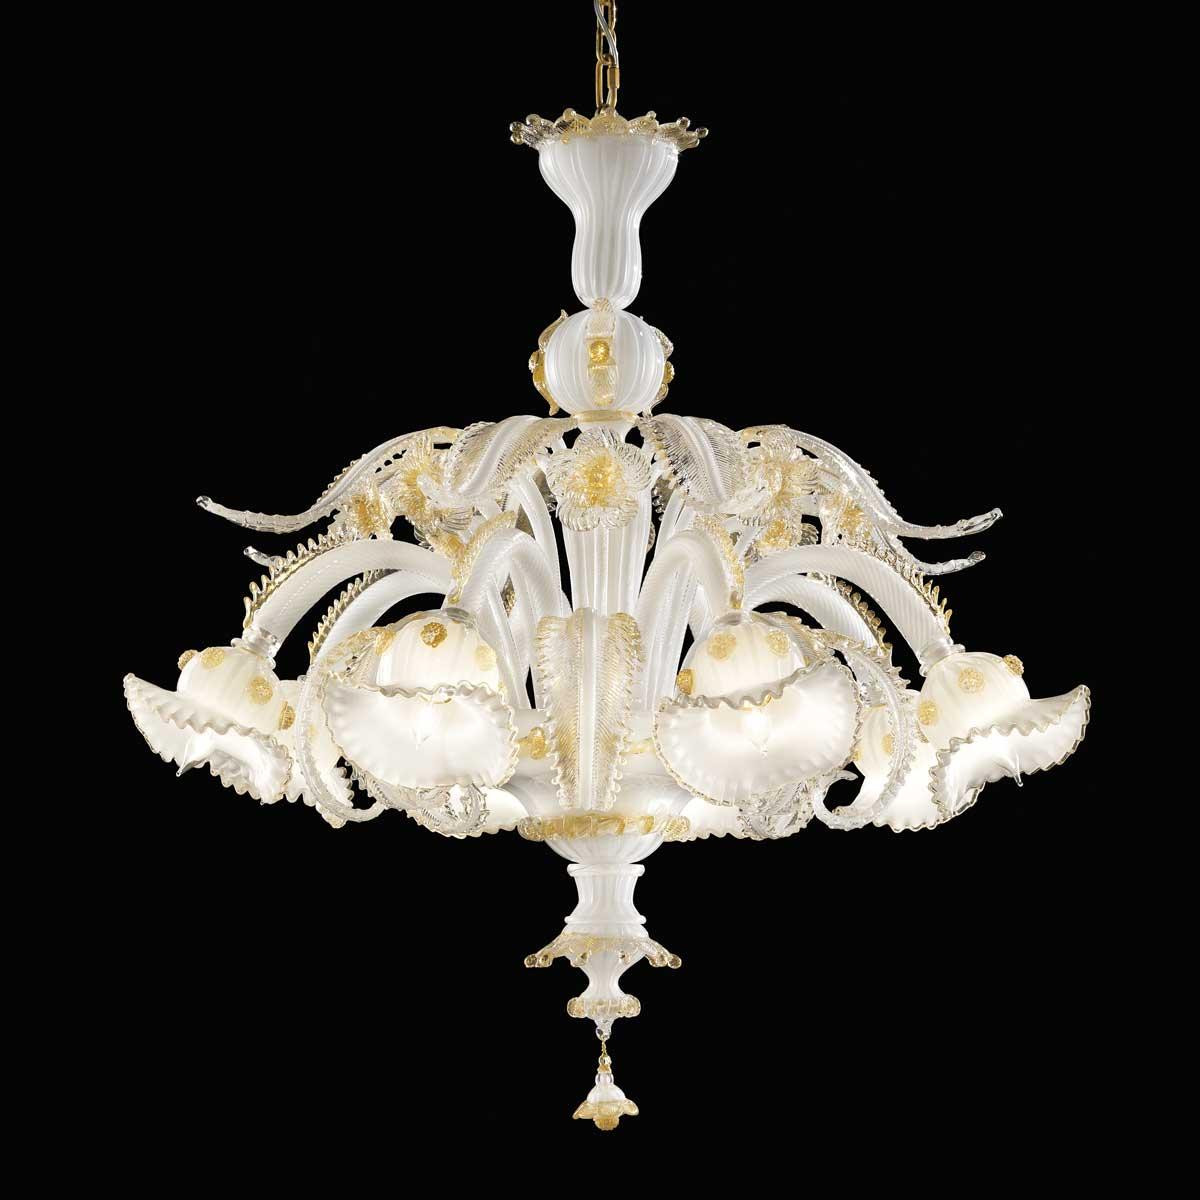 "Agnesina" Murano glass chandelier - 8 lights - white and gold